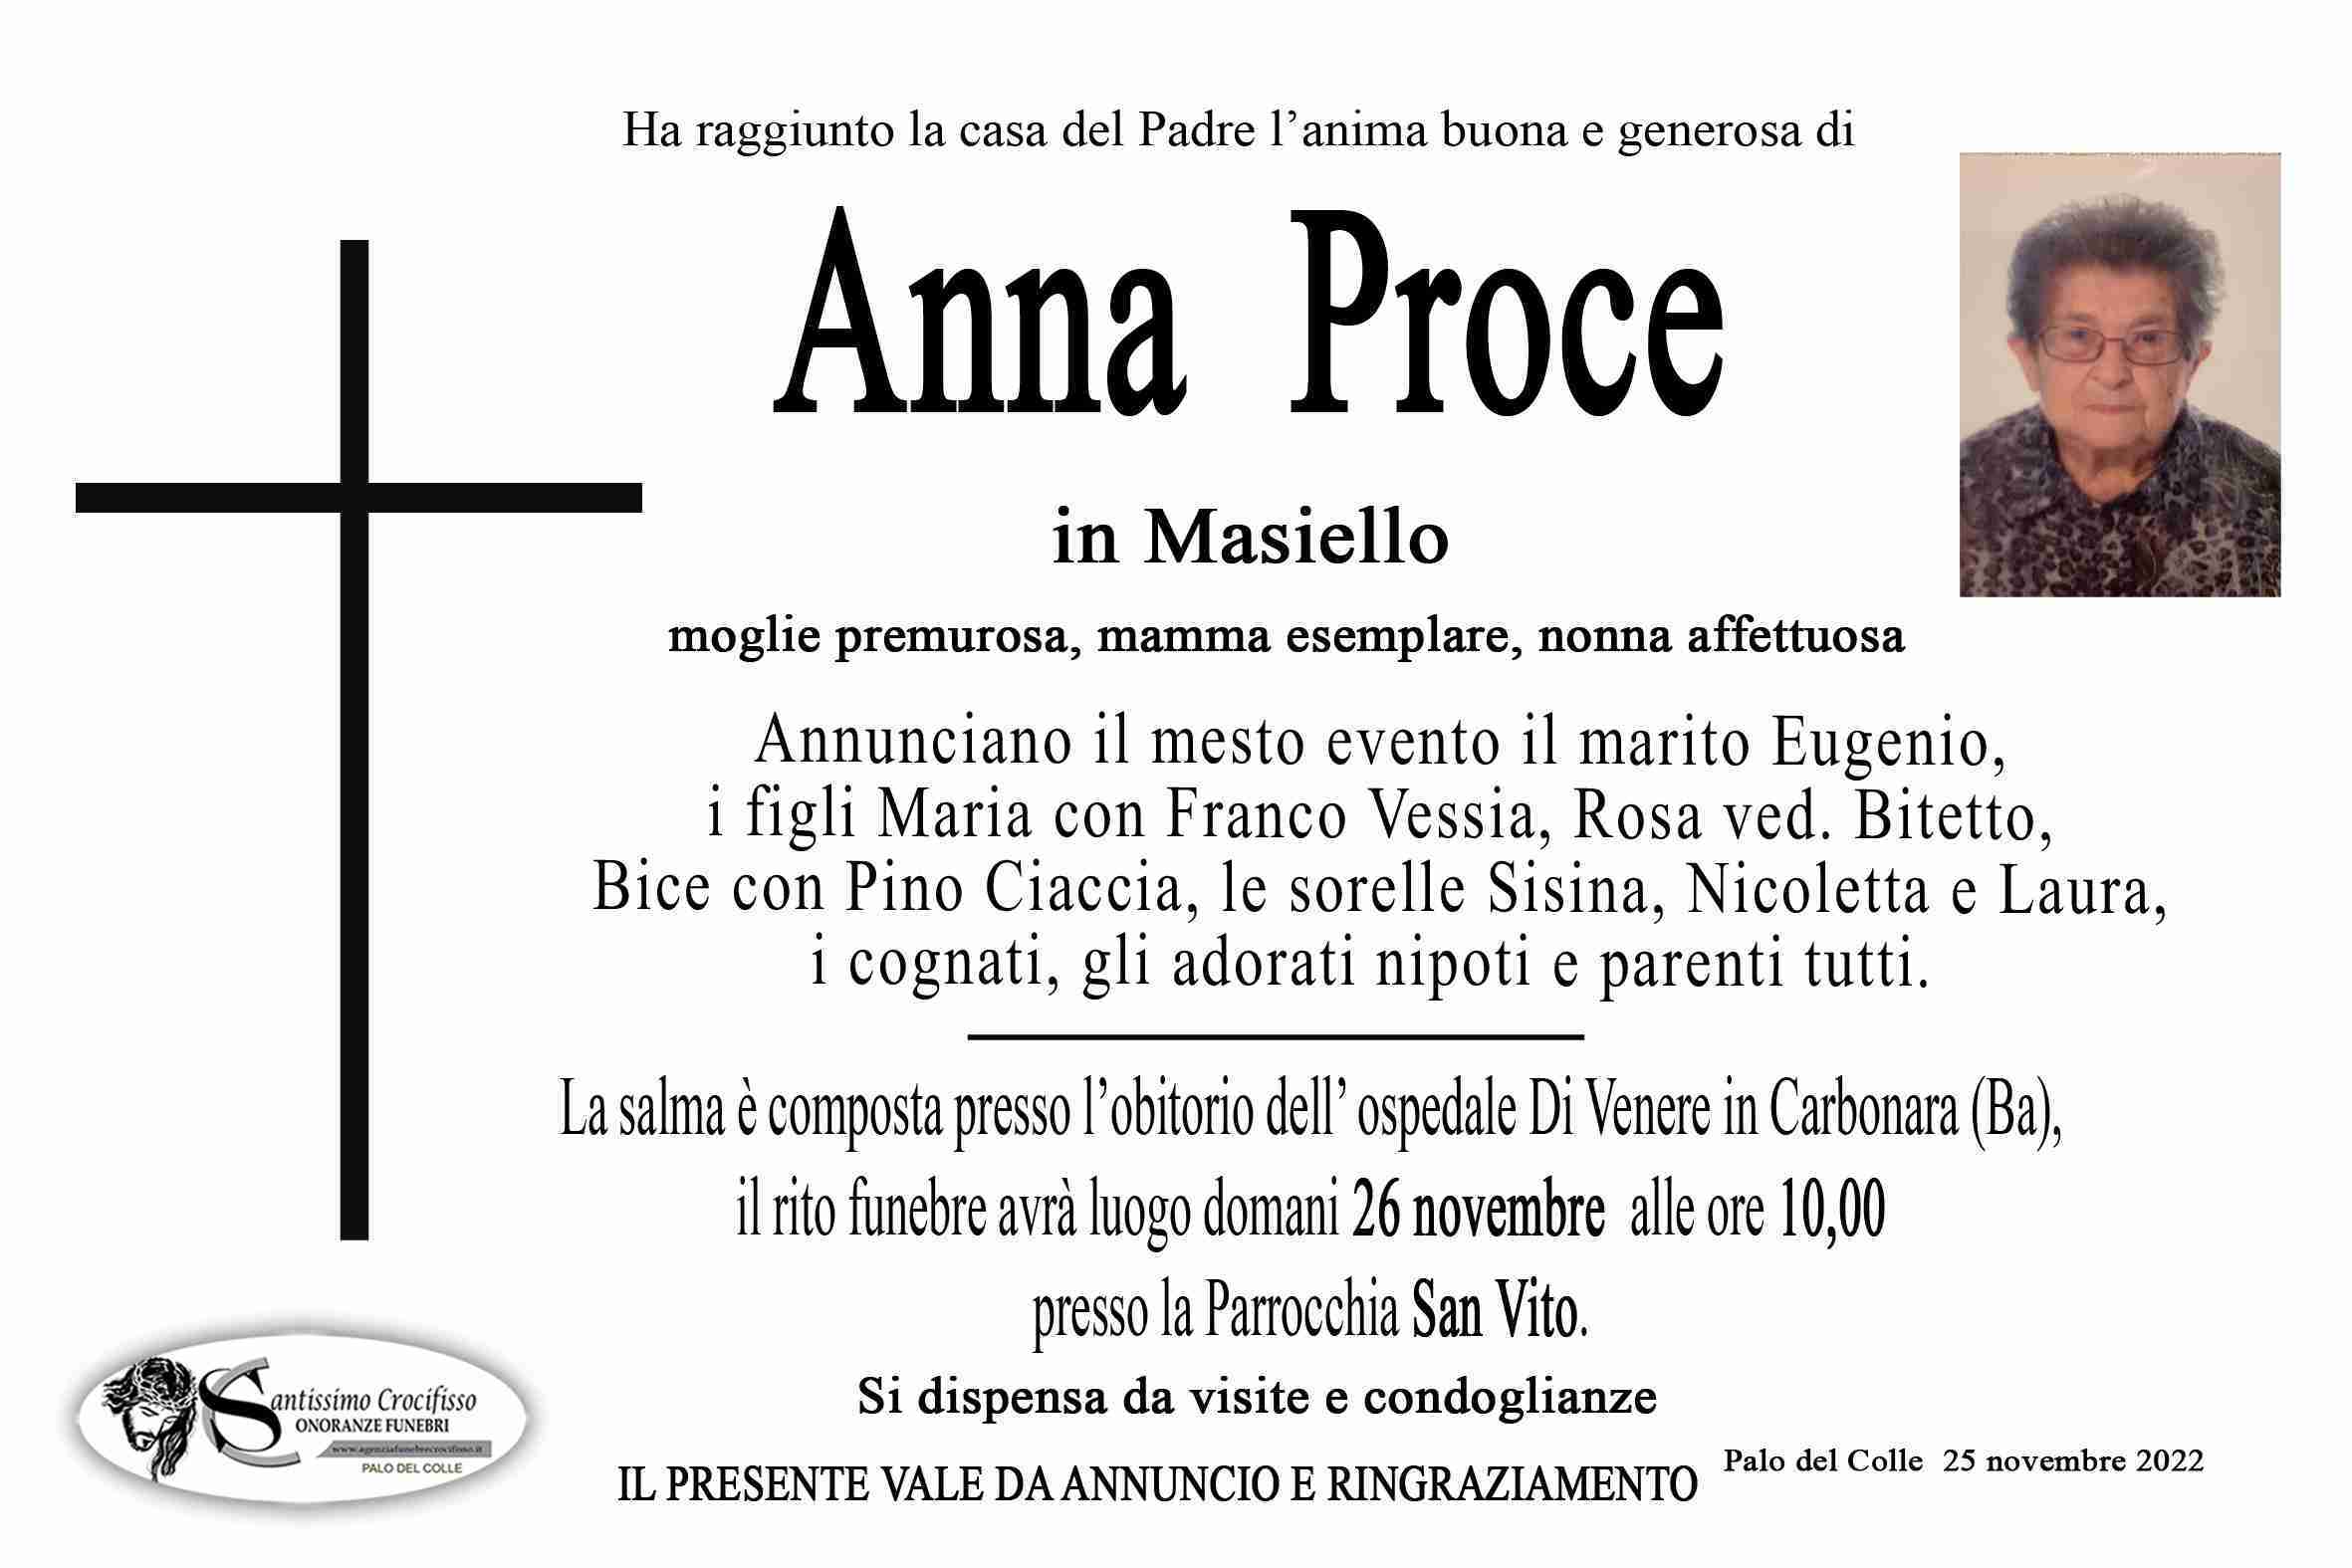 Proce Anna